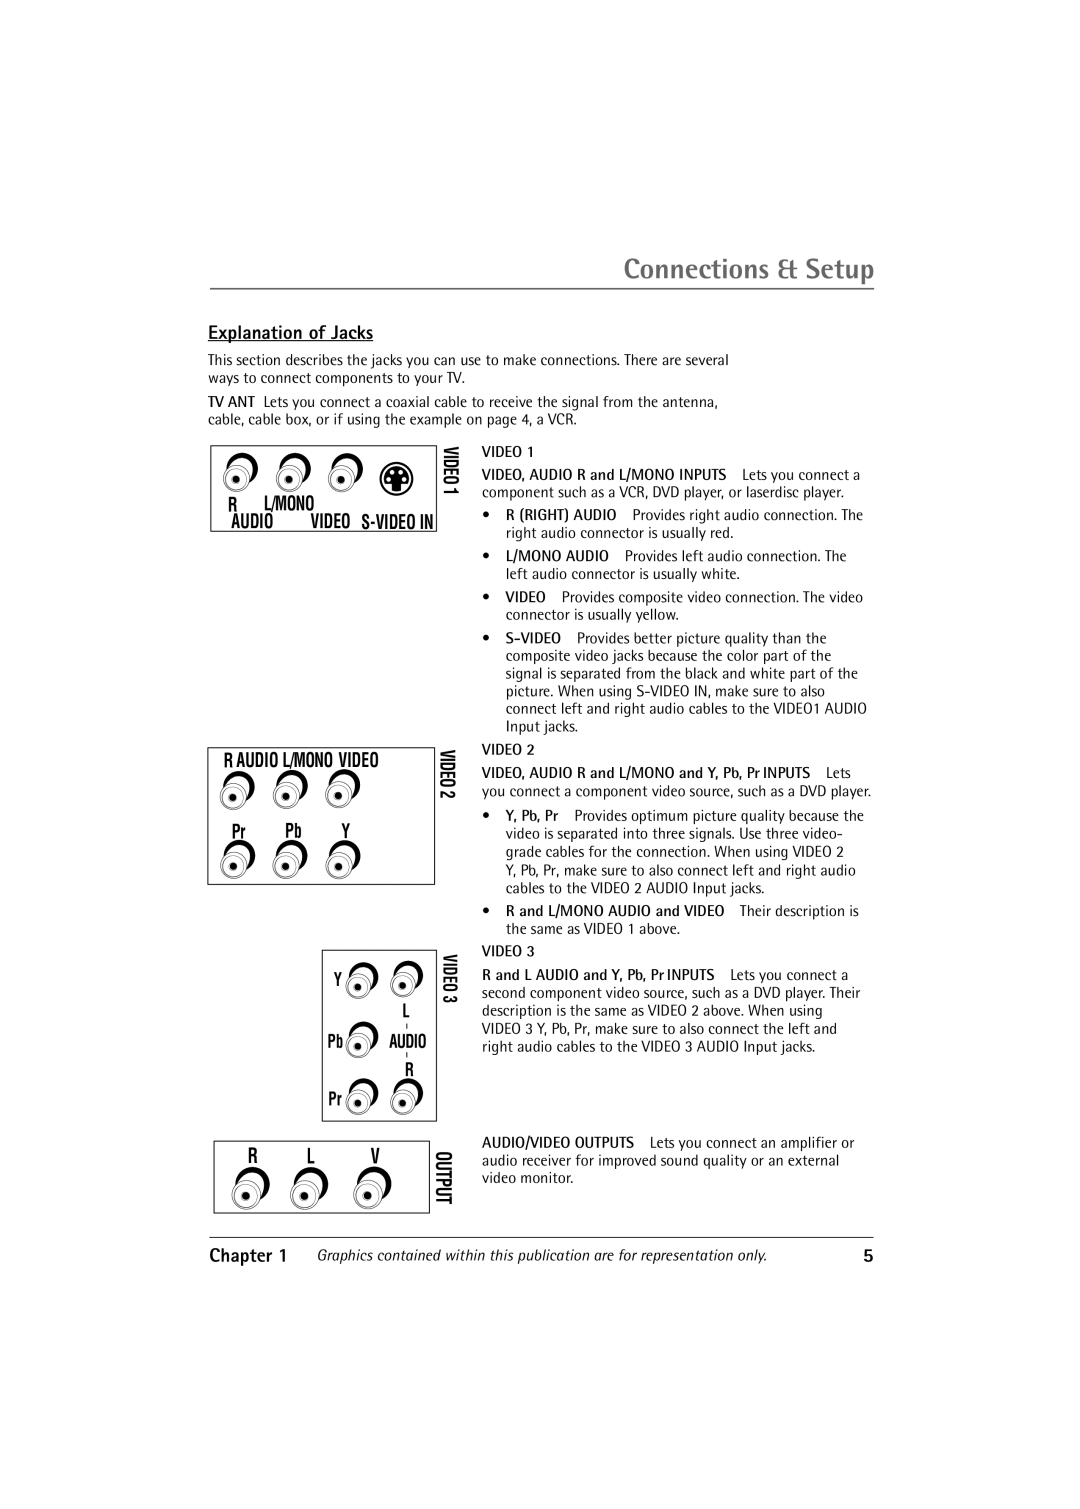 RCA 32F650T manual Explanation of Jacks, Pr Pb Y, R Pr, R Audio L/Mono Video, Output, Connections & Setup, Chapter 